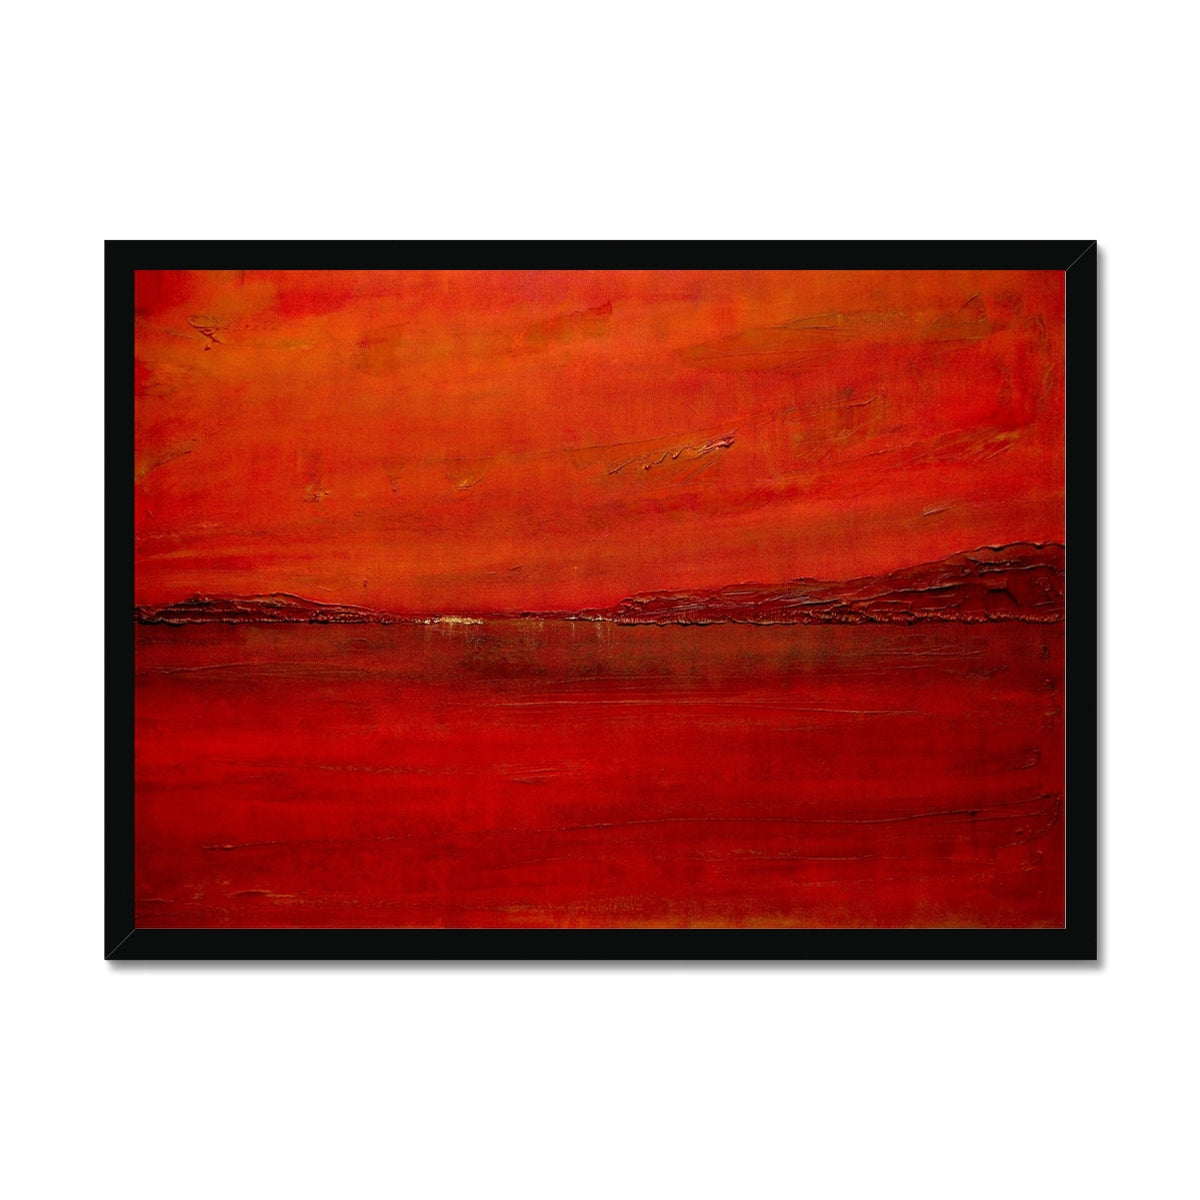 Deep Loch Lomond Sunset Painting | Framed Prints From Scotland-Framed Prints-Scottish Lochs & Mountains Art Gallery-A2 Landscape-Black Frame-Paintings, Prints, Homeware, Art Gifts From Scotland By Scottish Artist Kevin Hunter